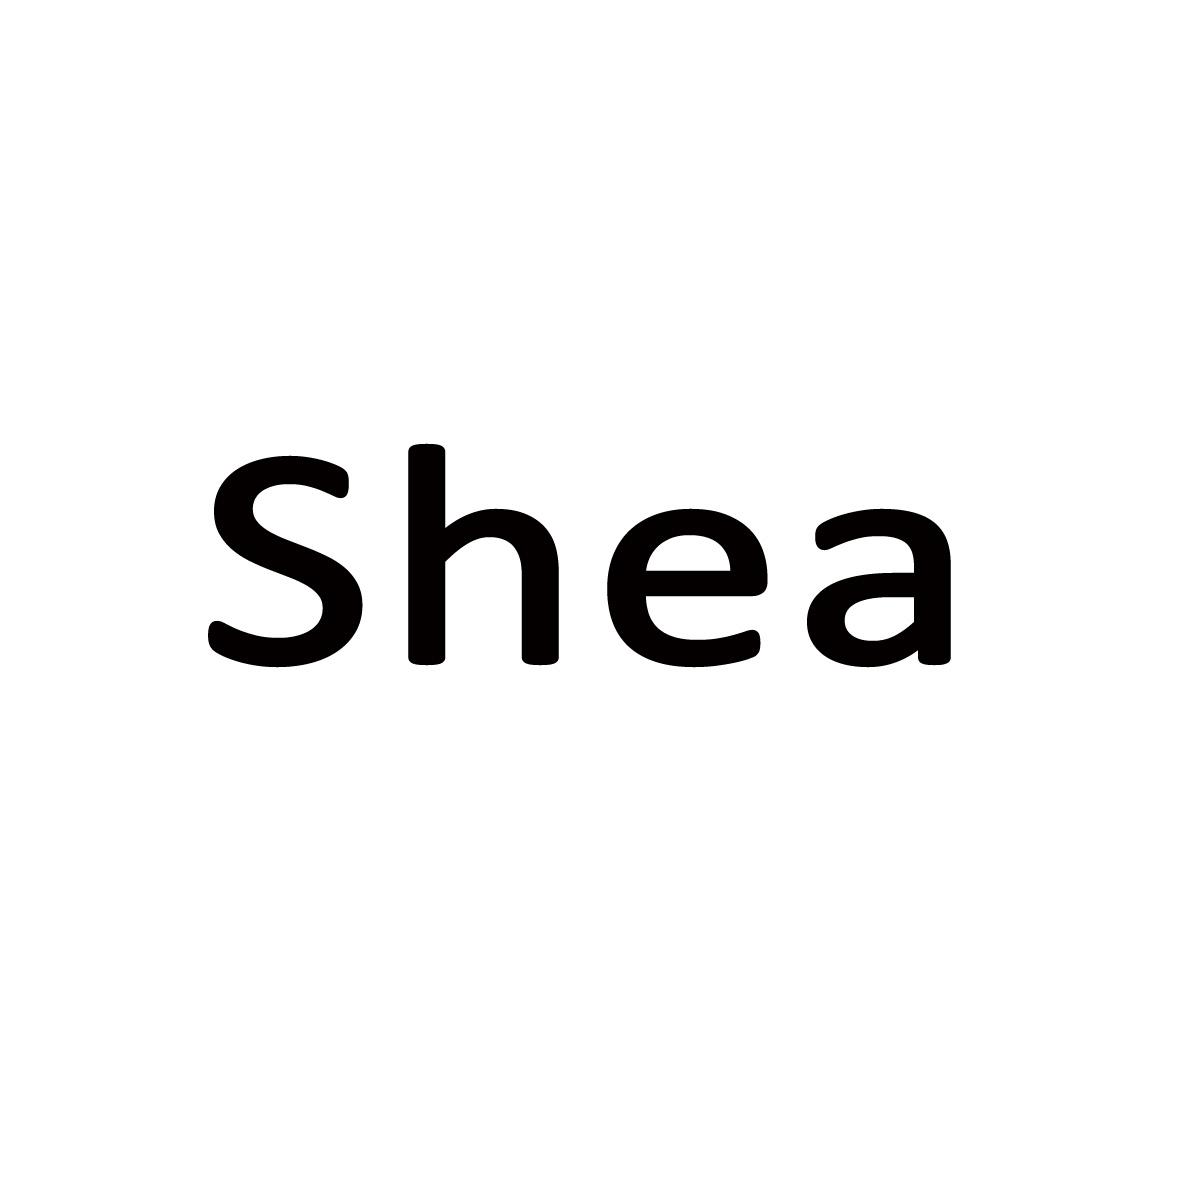 Shea